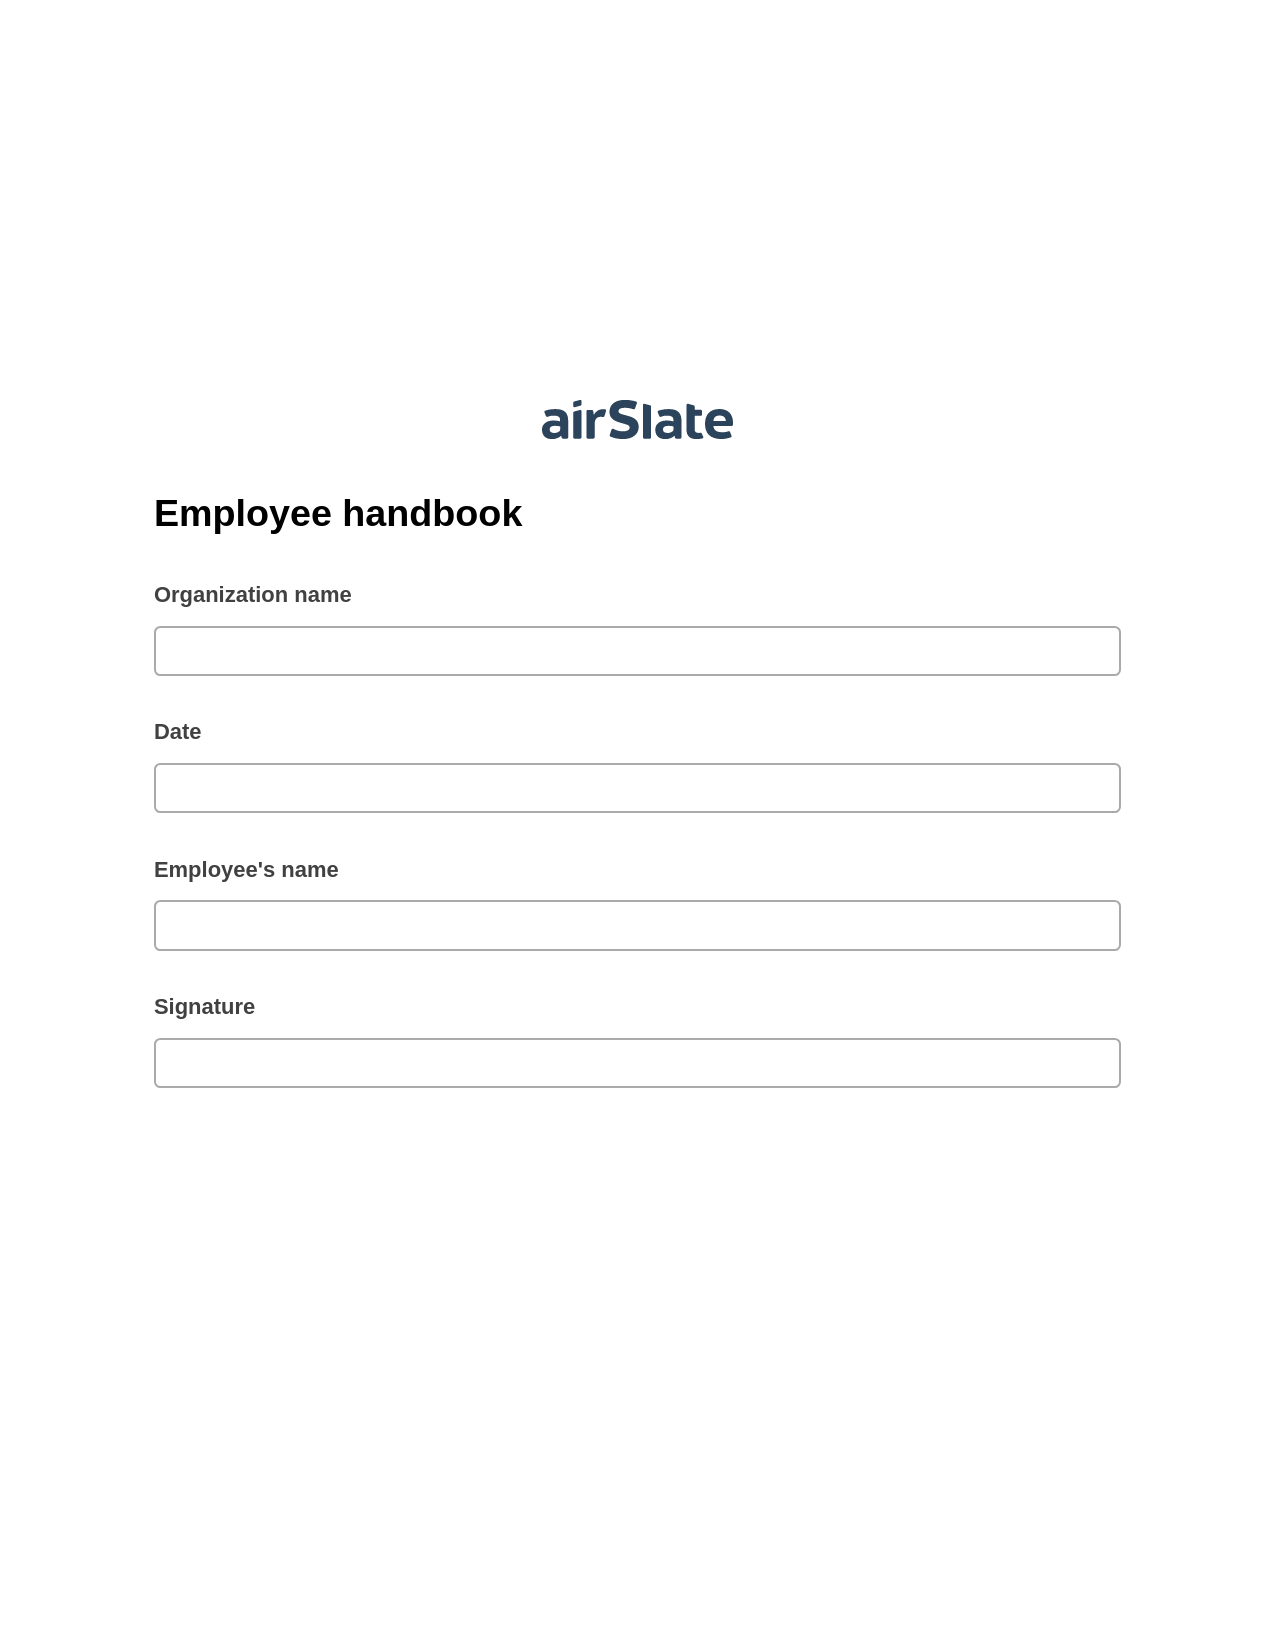 Employee handbook Pre-fill from Salesforce Record Bot, Audit Trail Bot, Export to Smartsheet